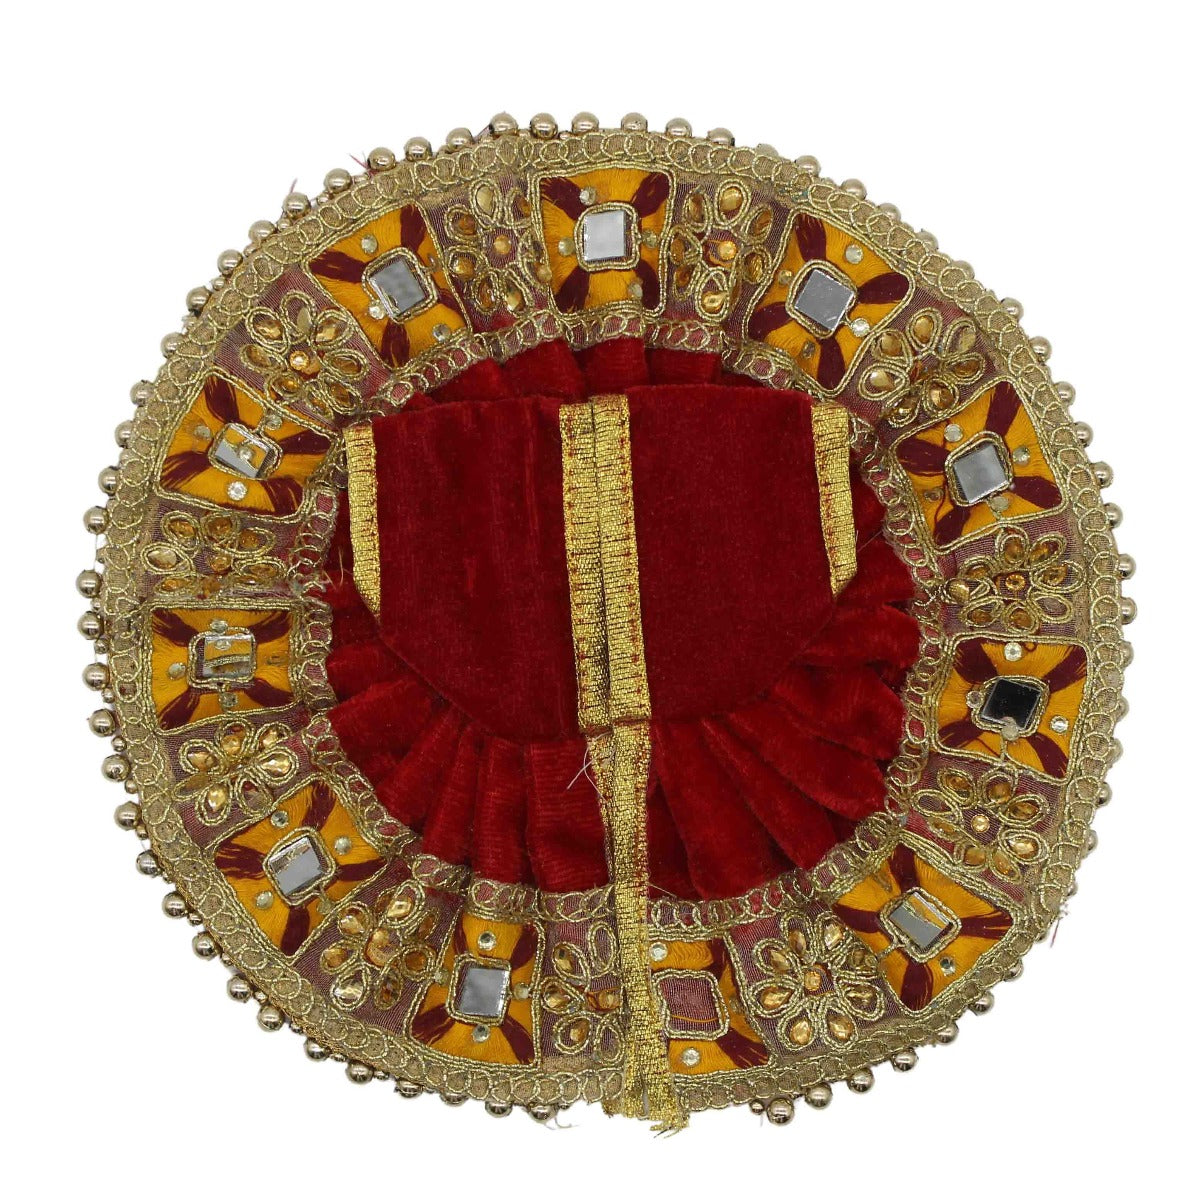 Golden Moti Decorated Red Dress For Laddu Gopal